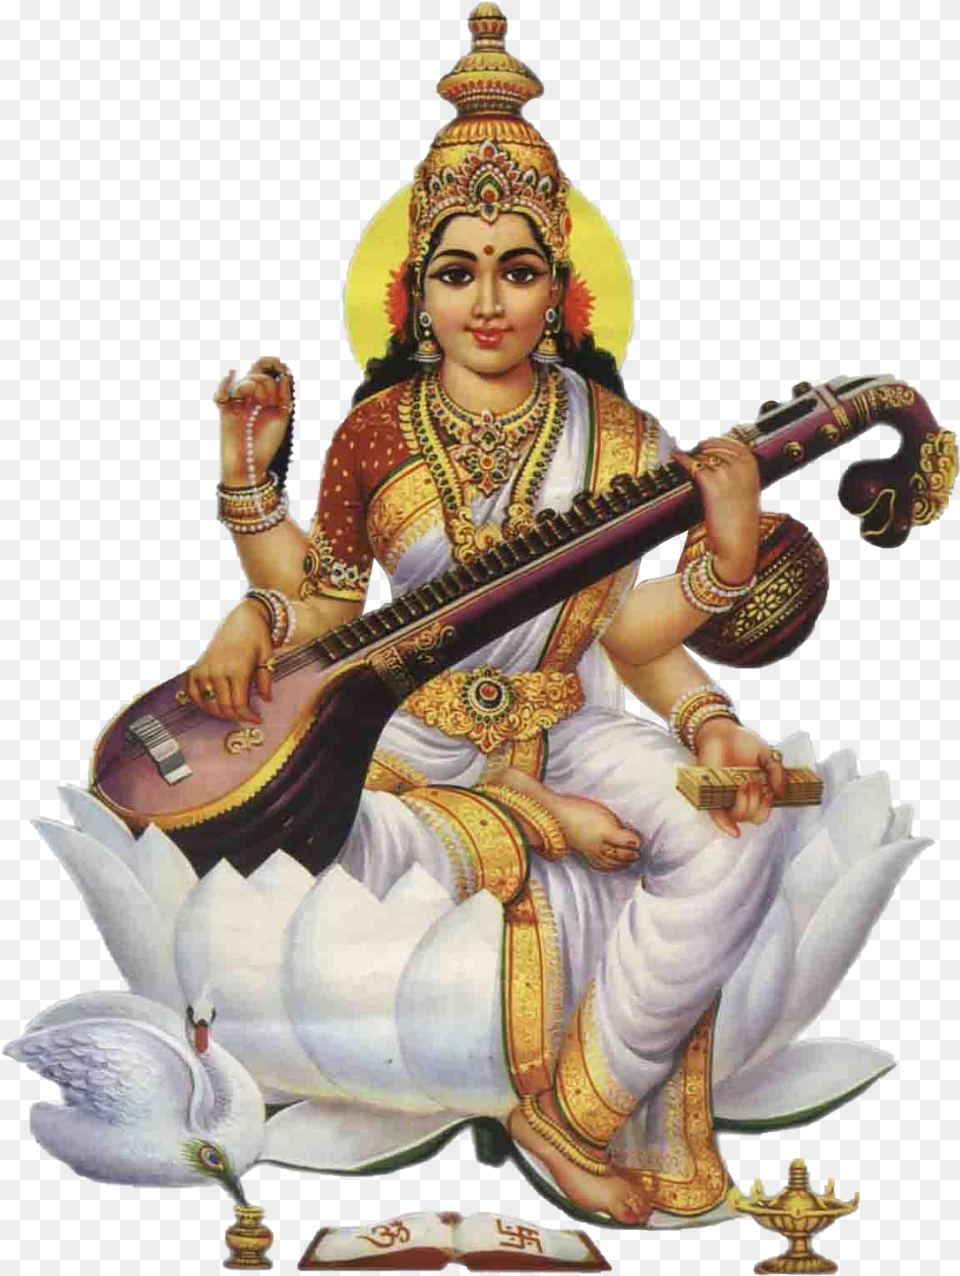 Sarswati Pooja 2019 About Pooja Vidhi Benefits Beliefs, Adult, Wedding, Person, Musical Instrument Png